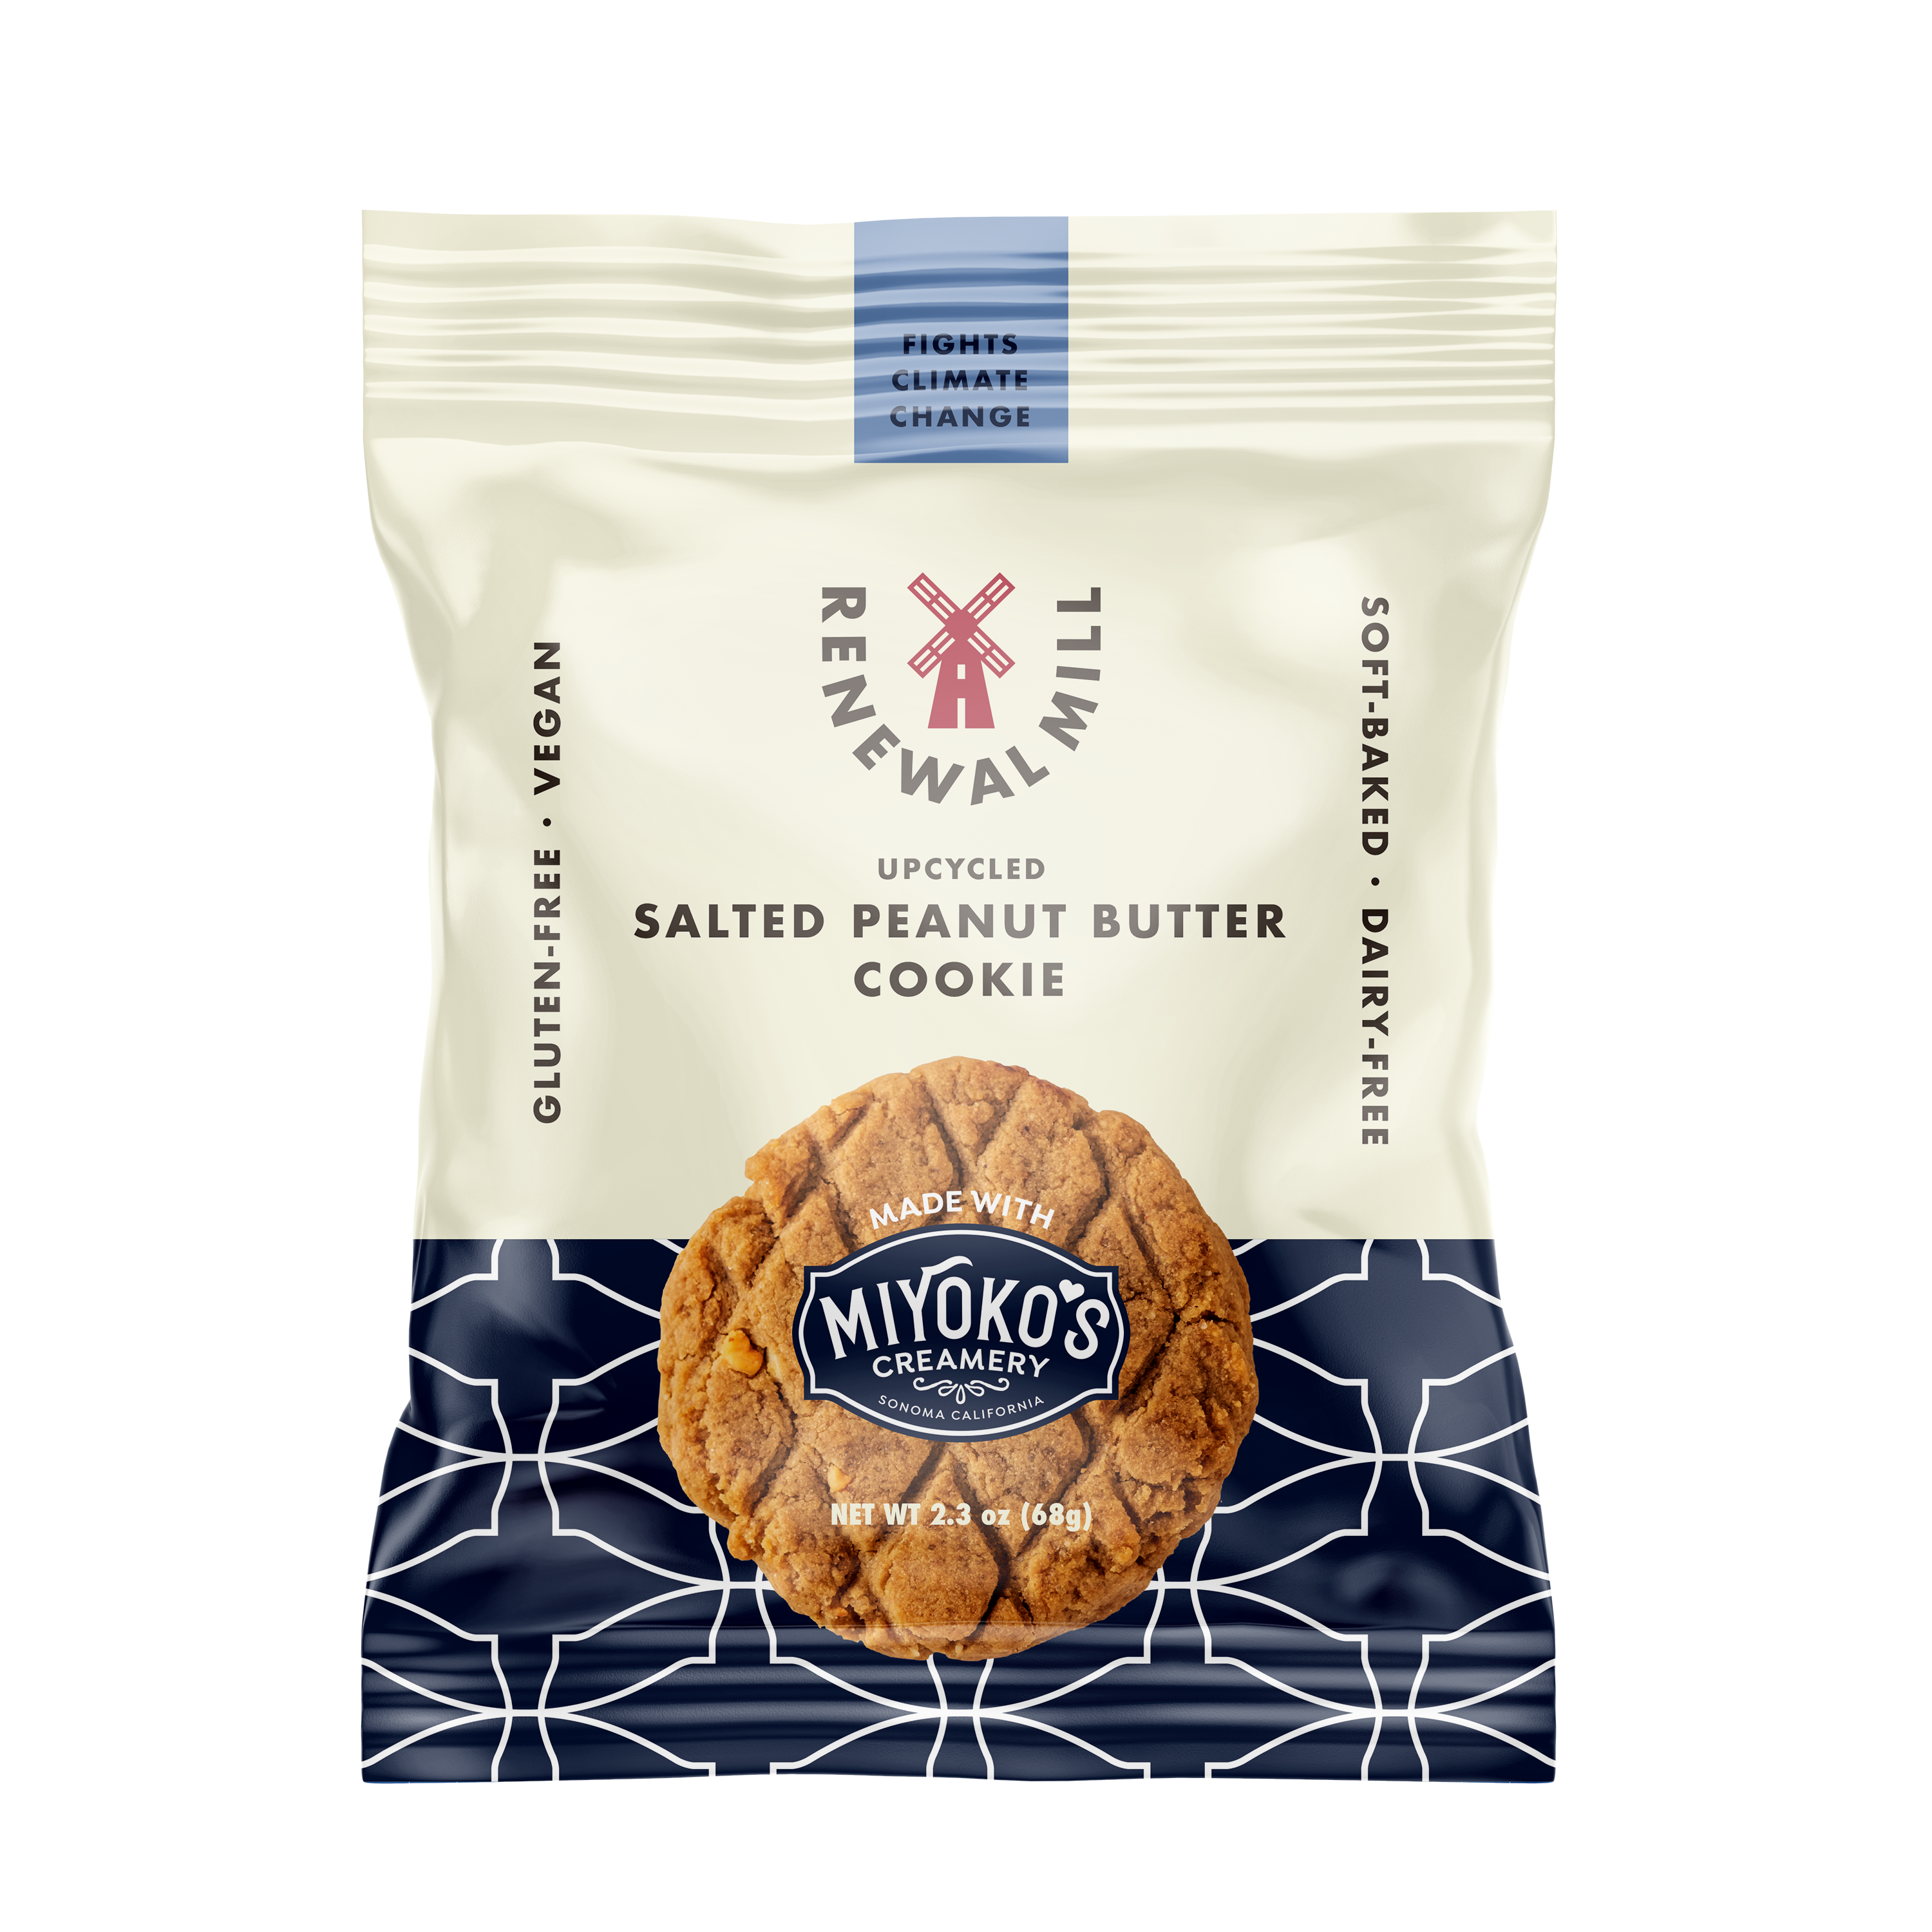 Renewal Mill x Miyoko's Creamery Salted Peanut Butter Cookie